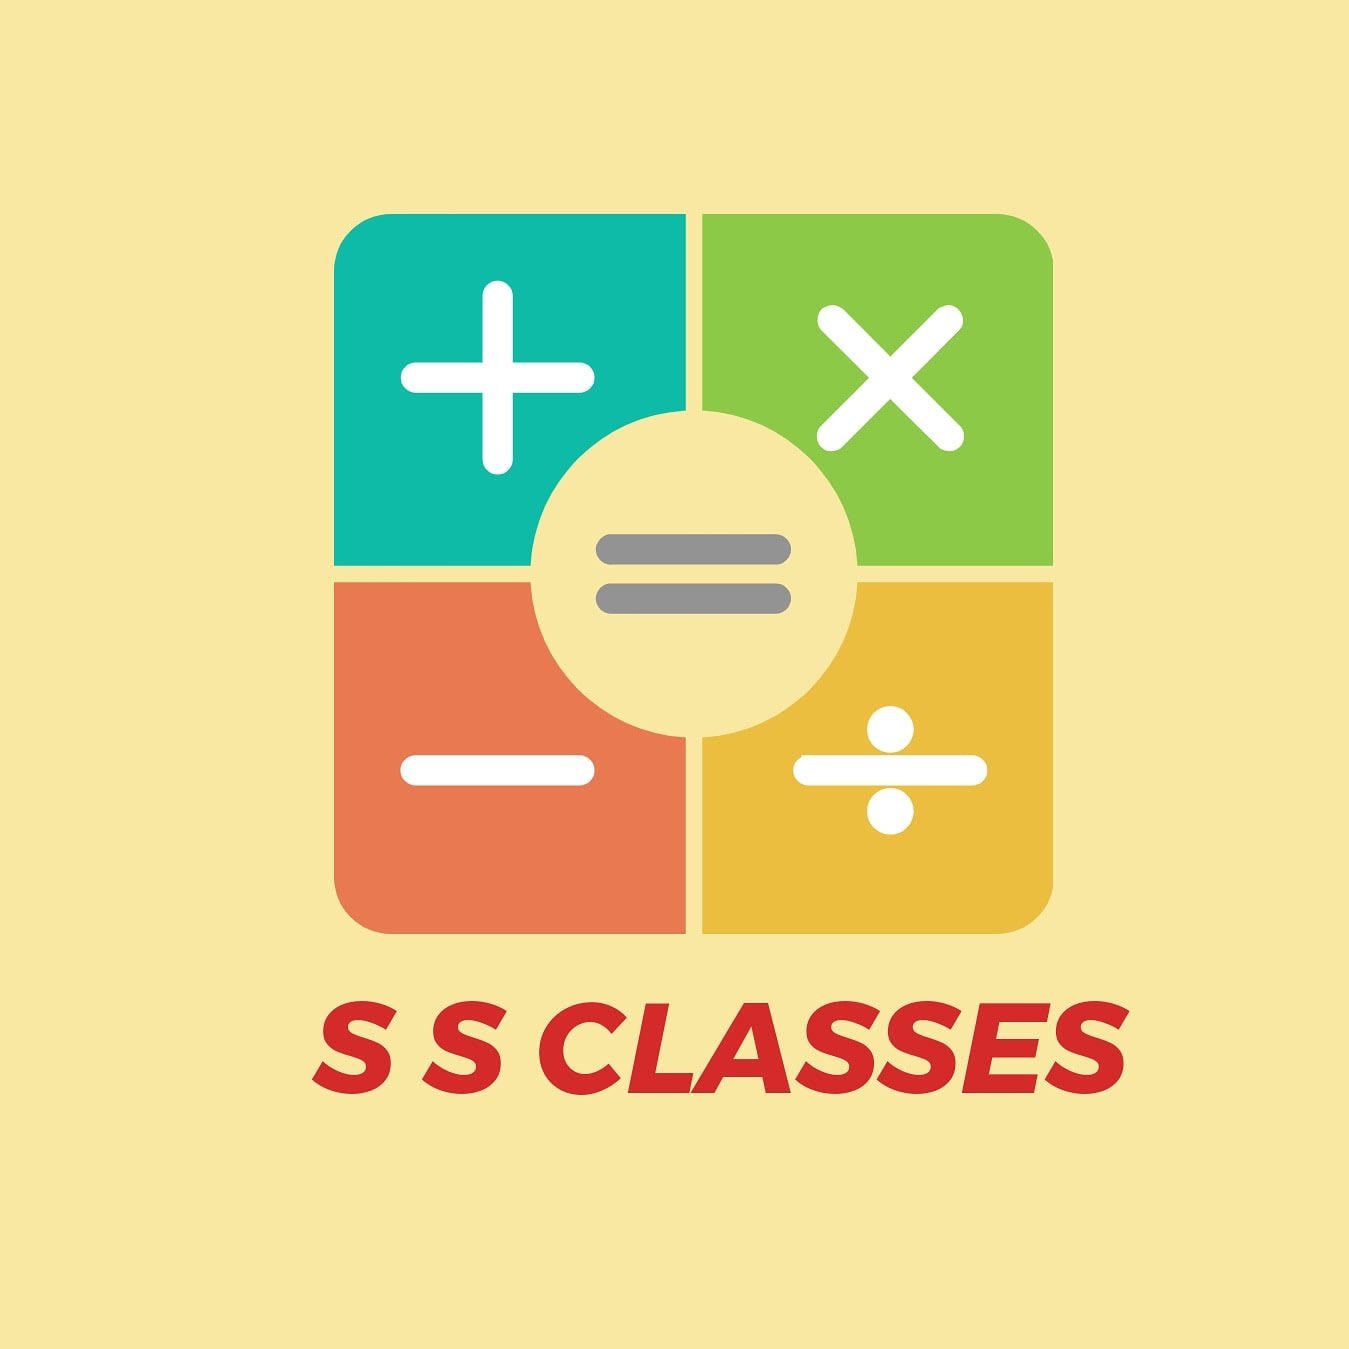 S S Classes